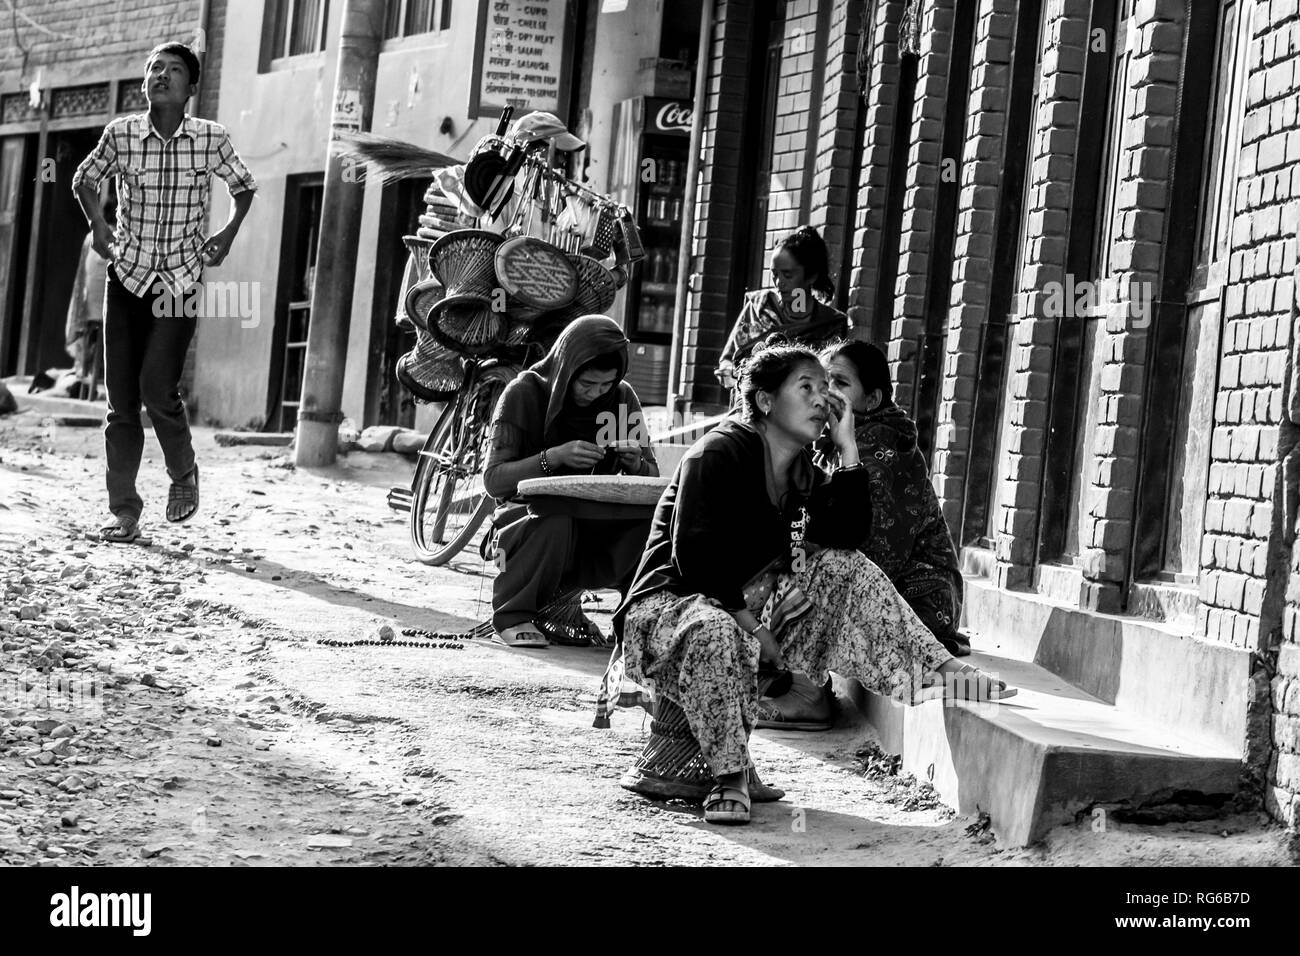 Kathmandu, Nepal - November 5, 2015: Nepalese people sitting along a street in central Kathmandu. Stock Photo